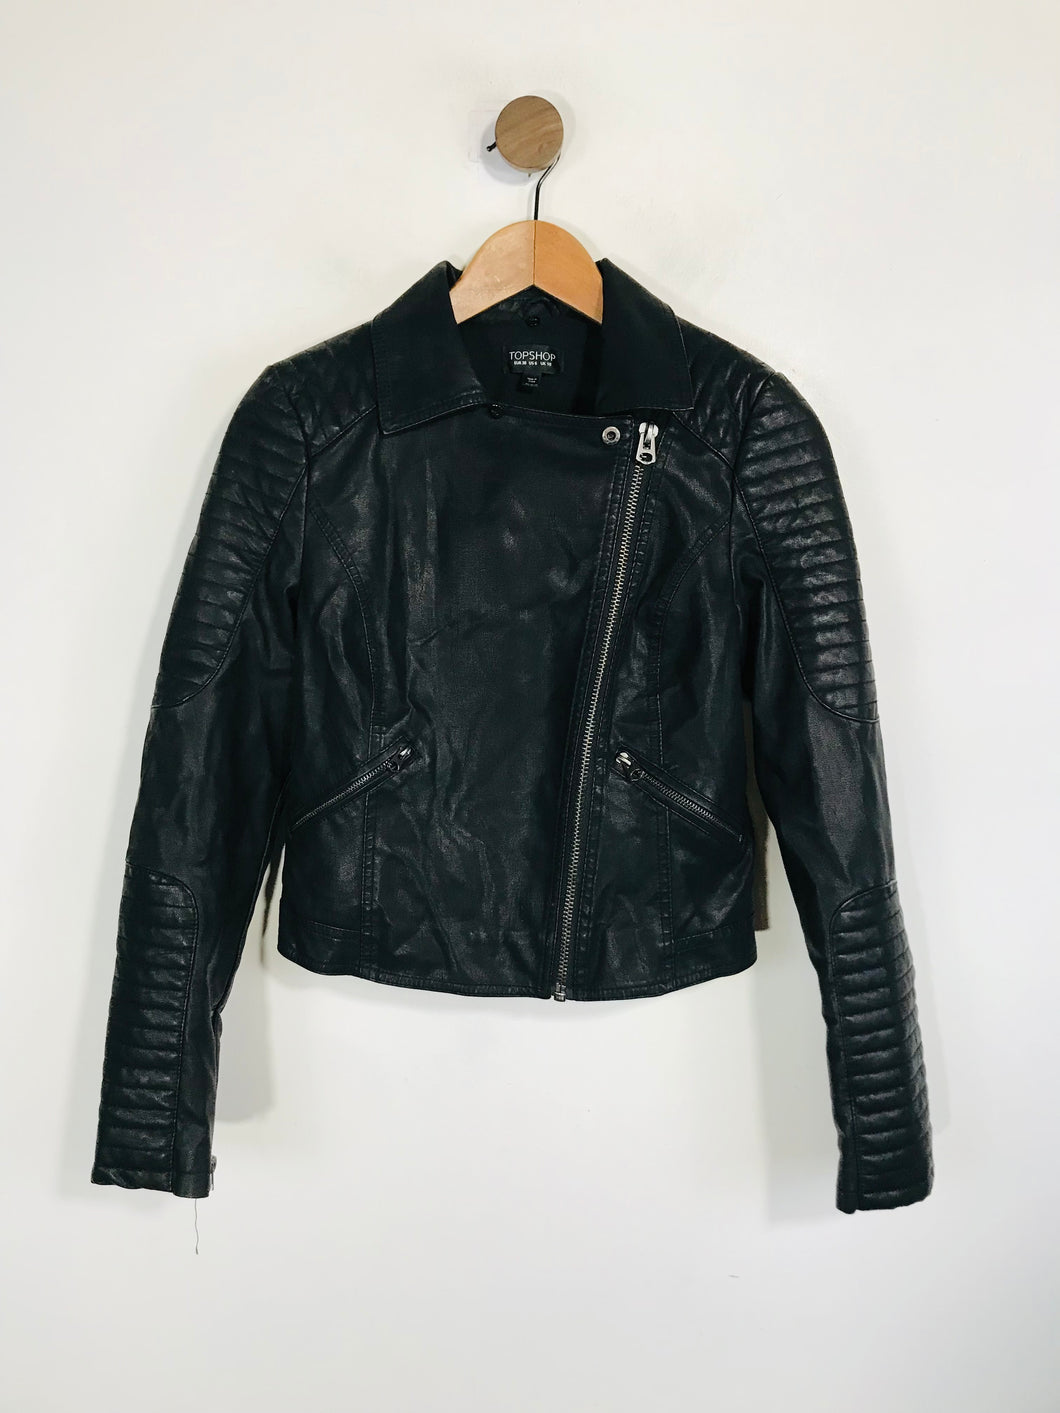 Topshop Women's Faux Leather Biker Jacket | UK10 | Black